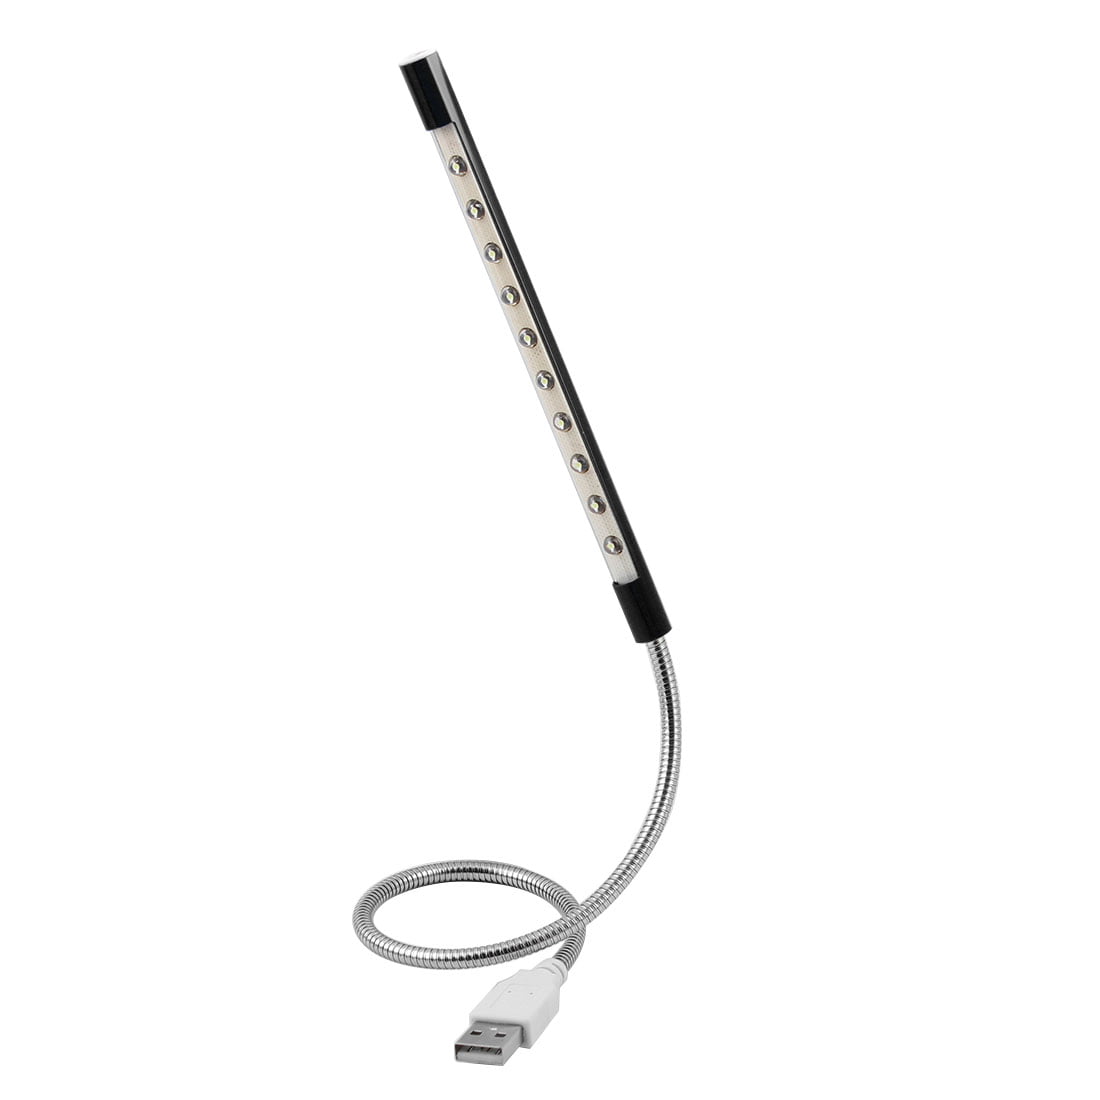 Flexible Neck 10 LED USB Keyboard Light Lamp for Desktop Notebook Laptop s517 